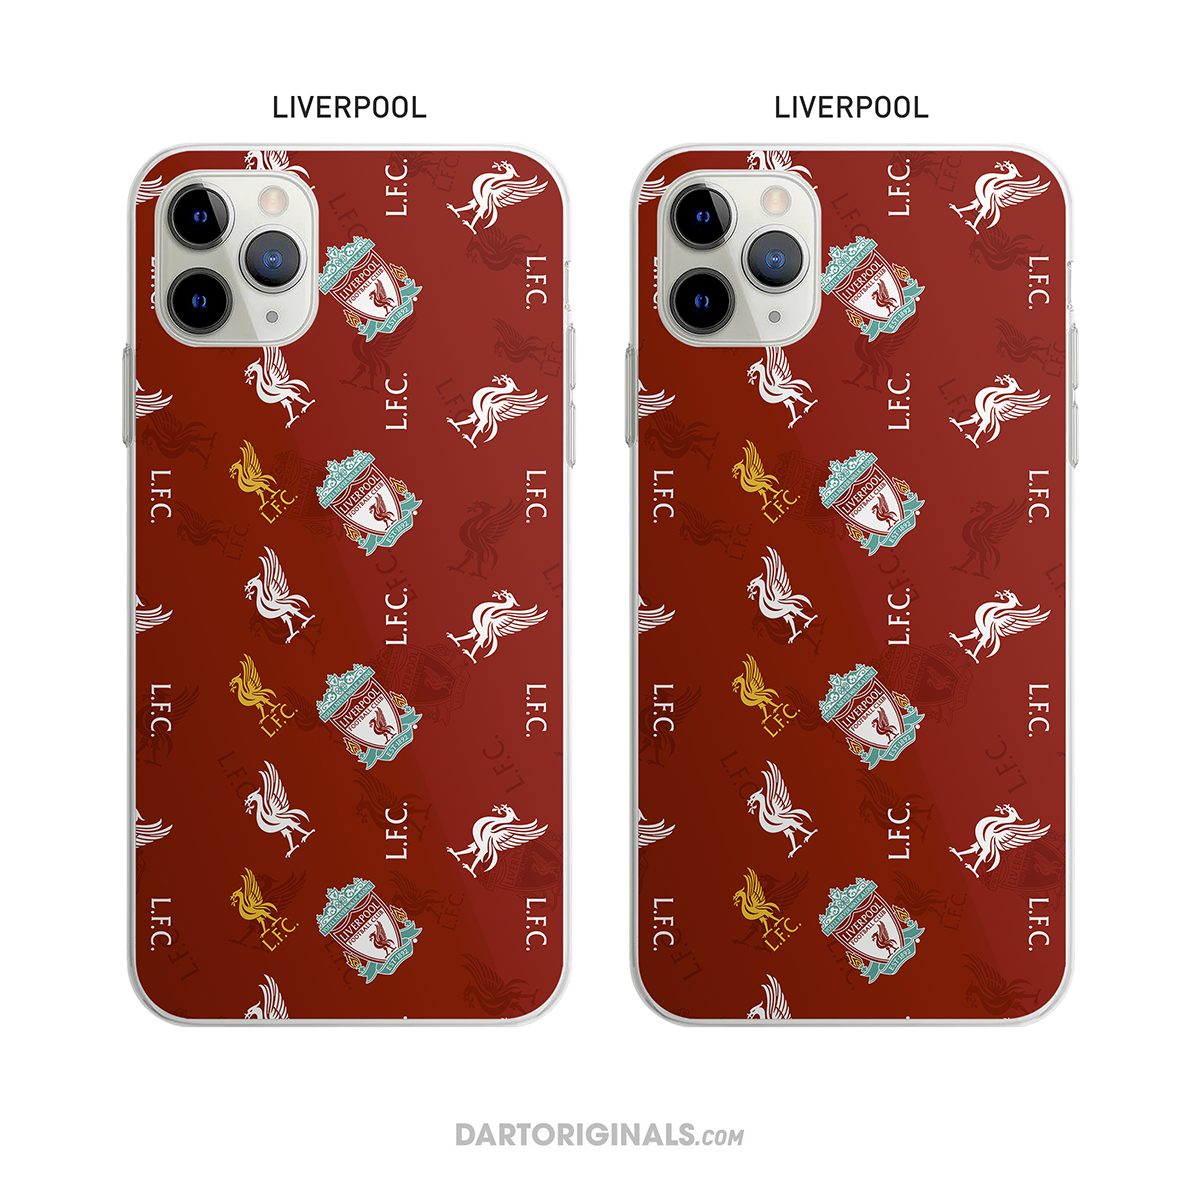 Liverpool: Sticker Edition